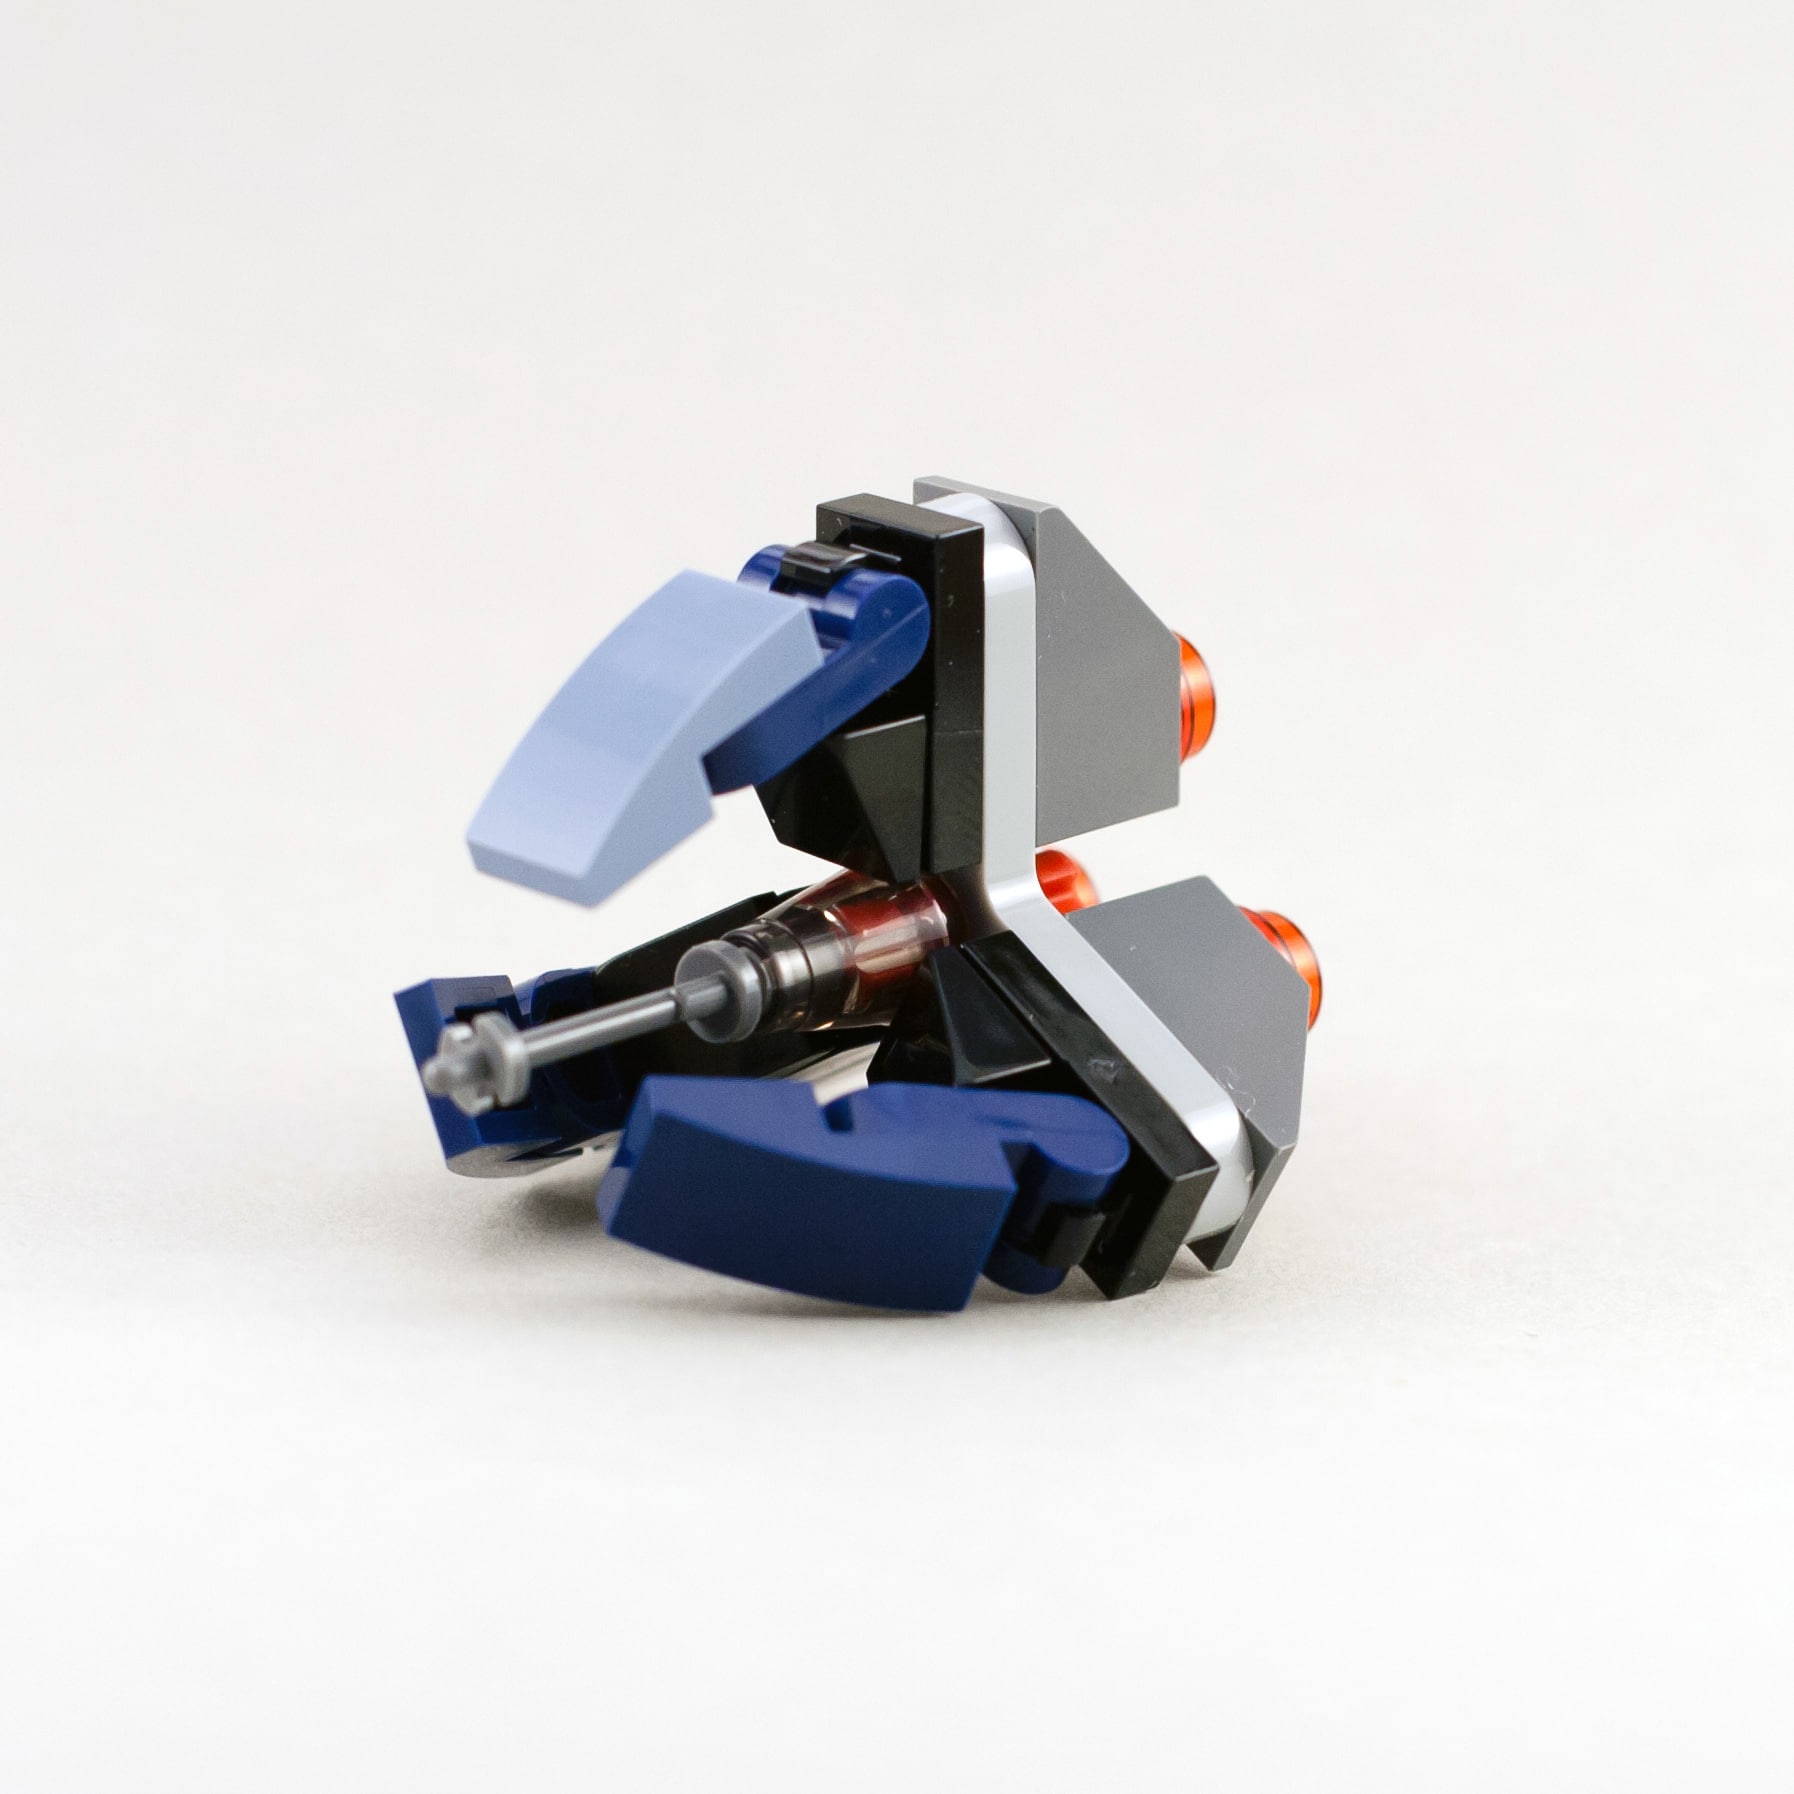 LEGO Star Wars Tri-fighter droid mikro model sestavljen iz legokock.